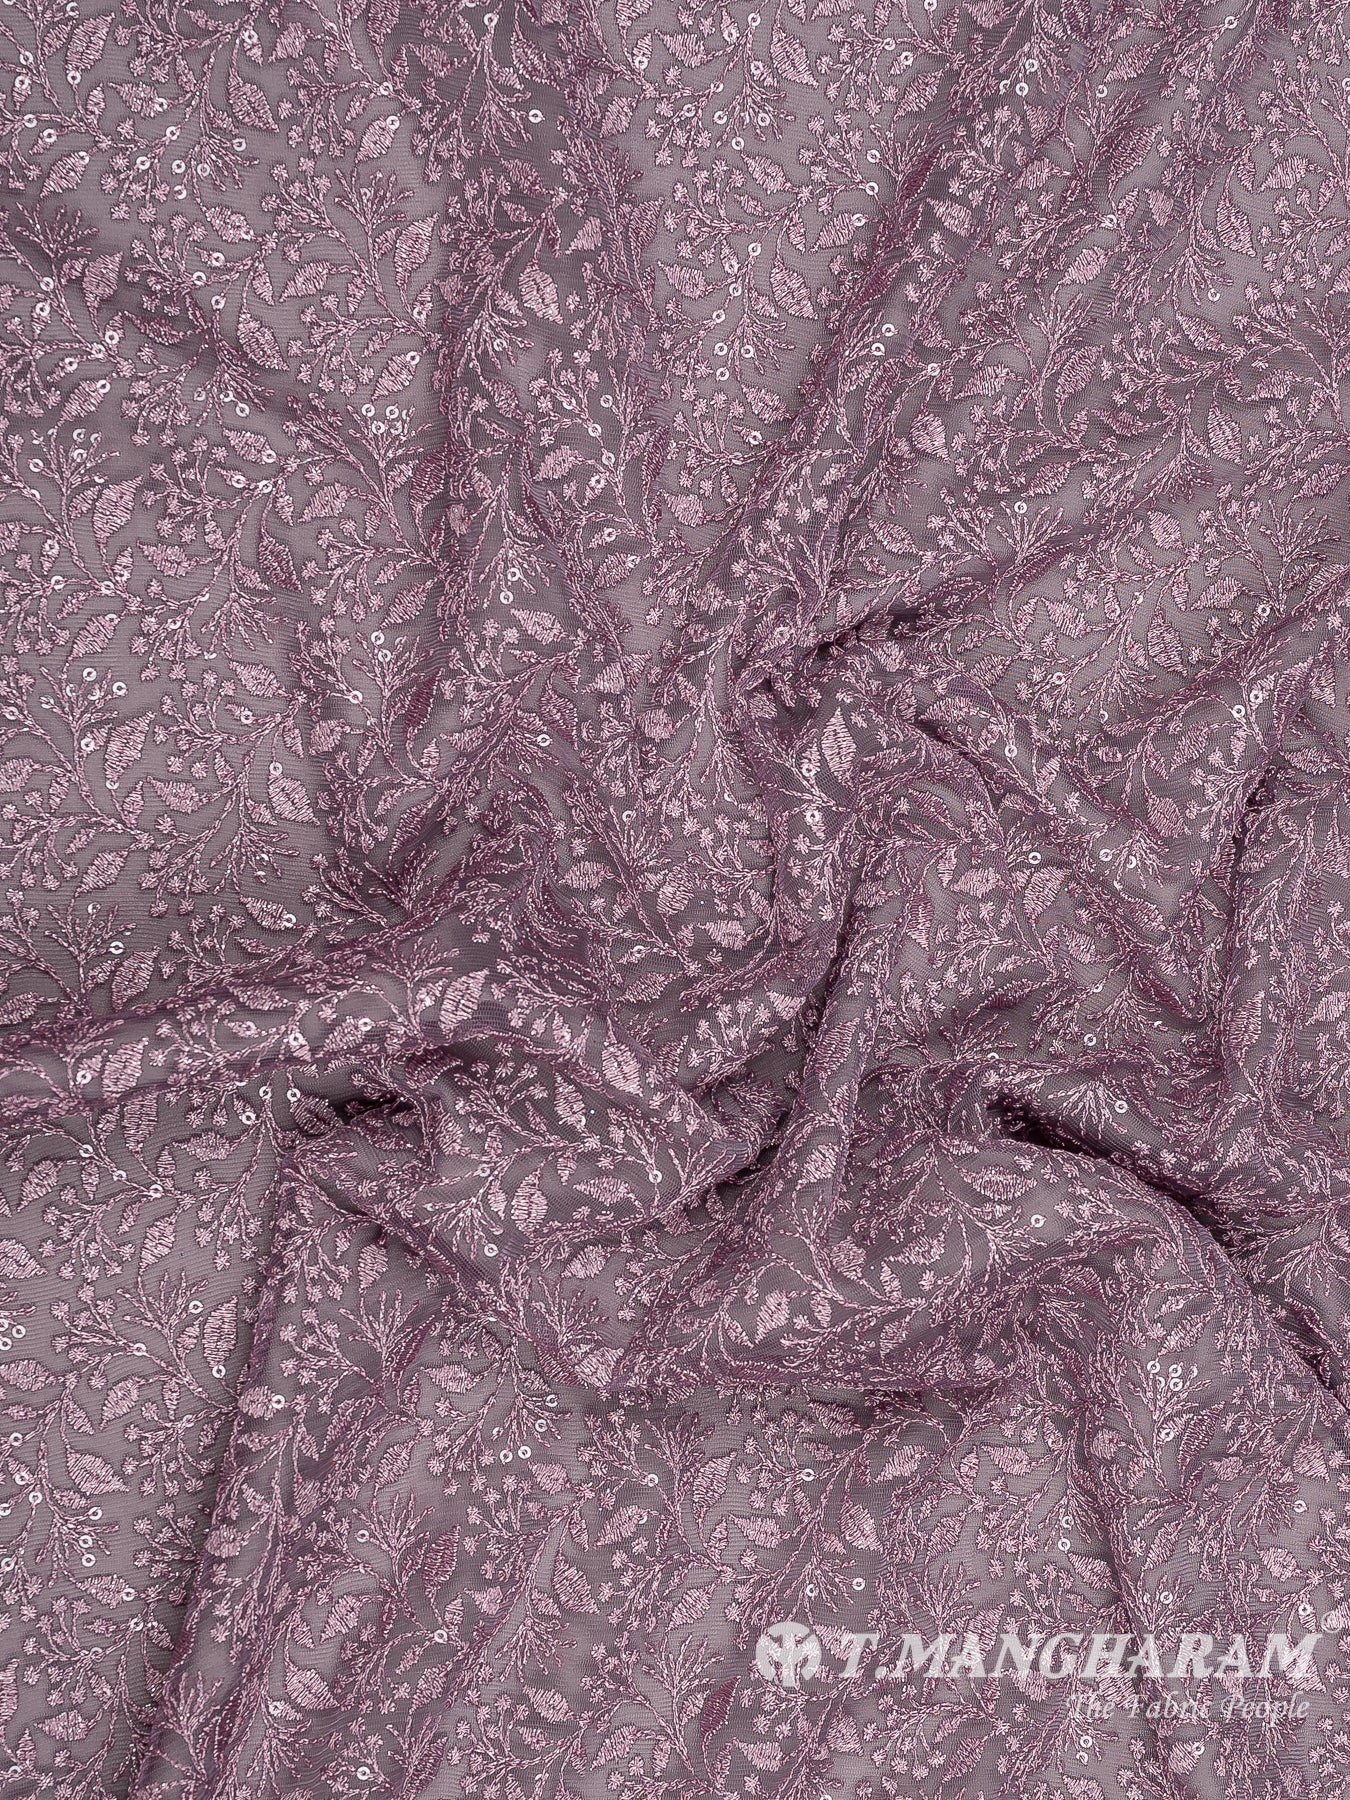 Violet Net Fabric - EB6596 view-4